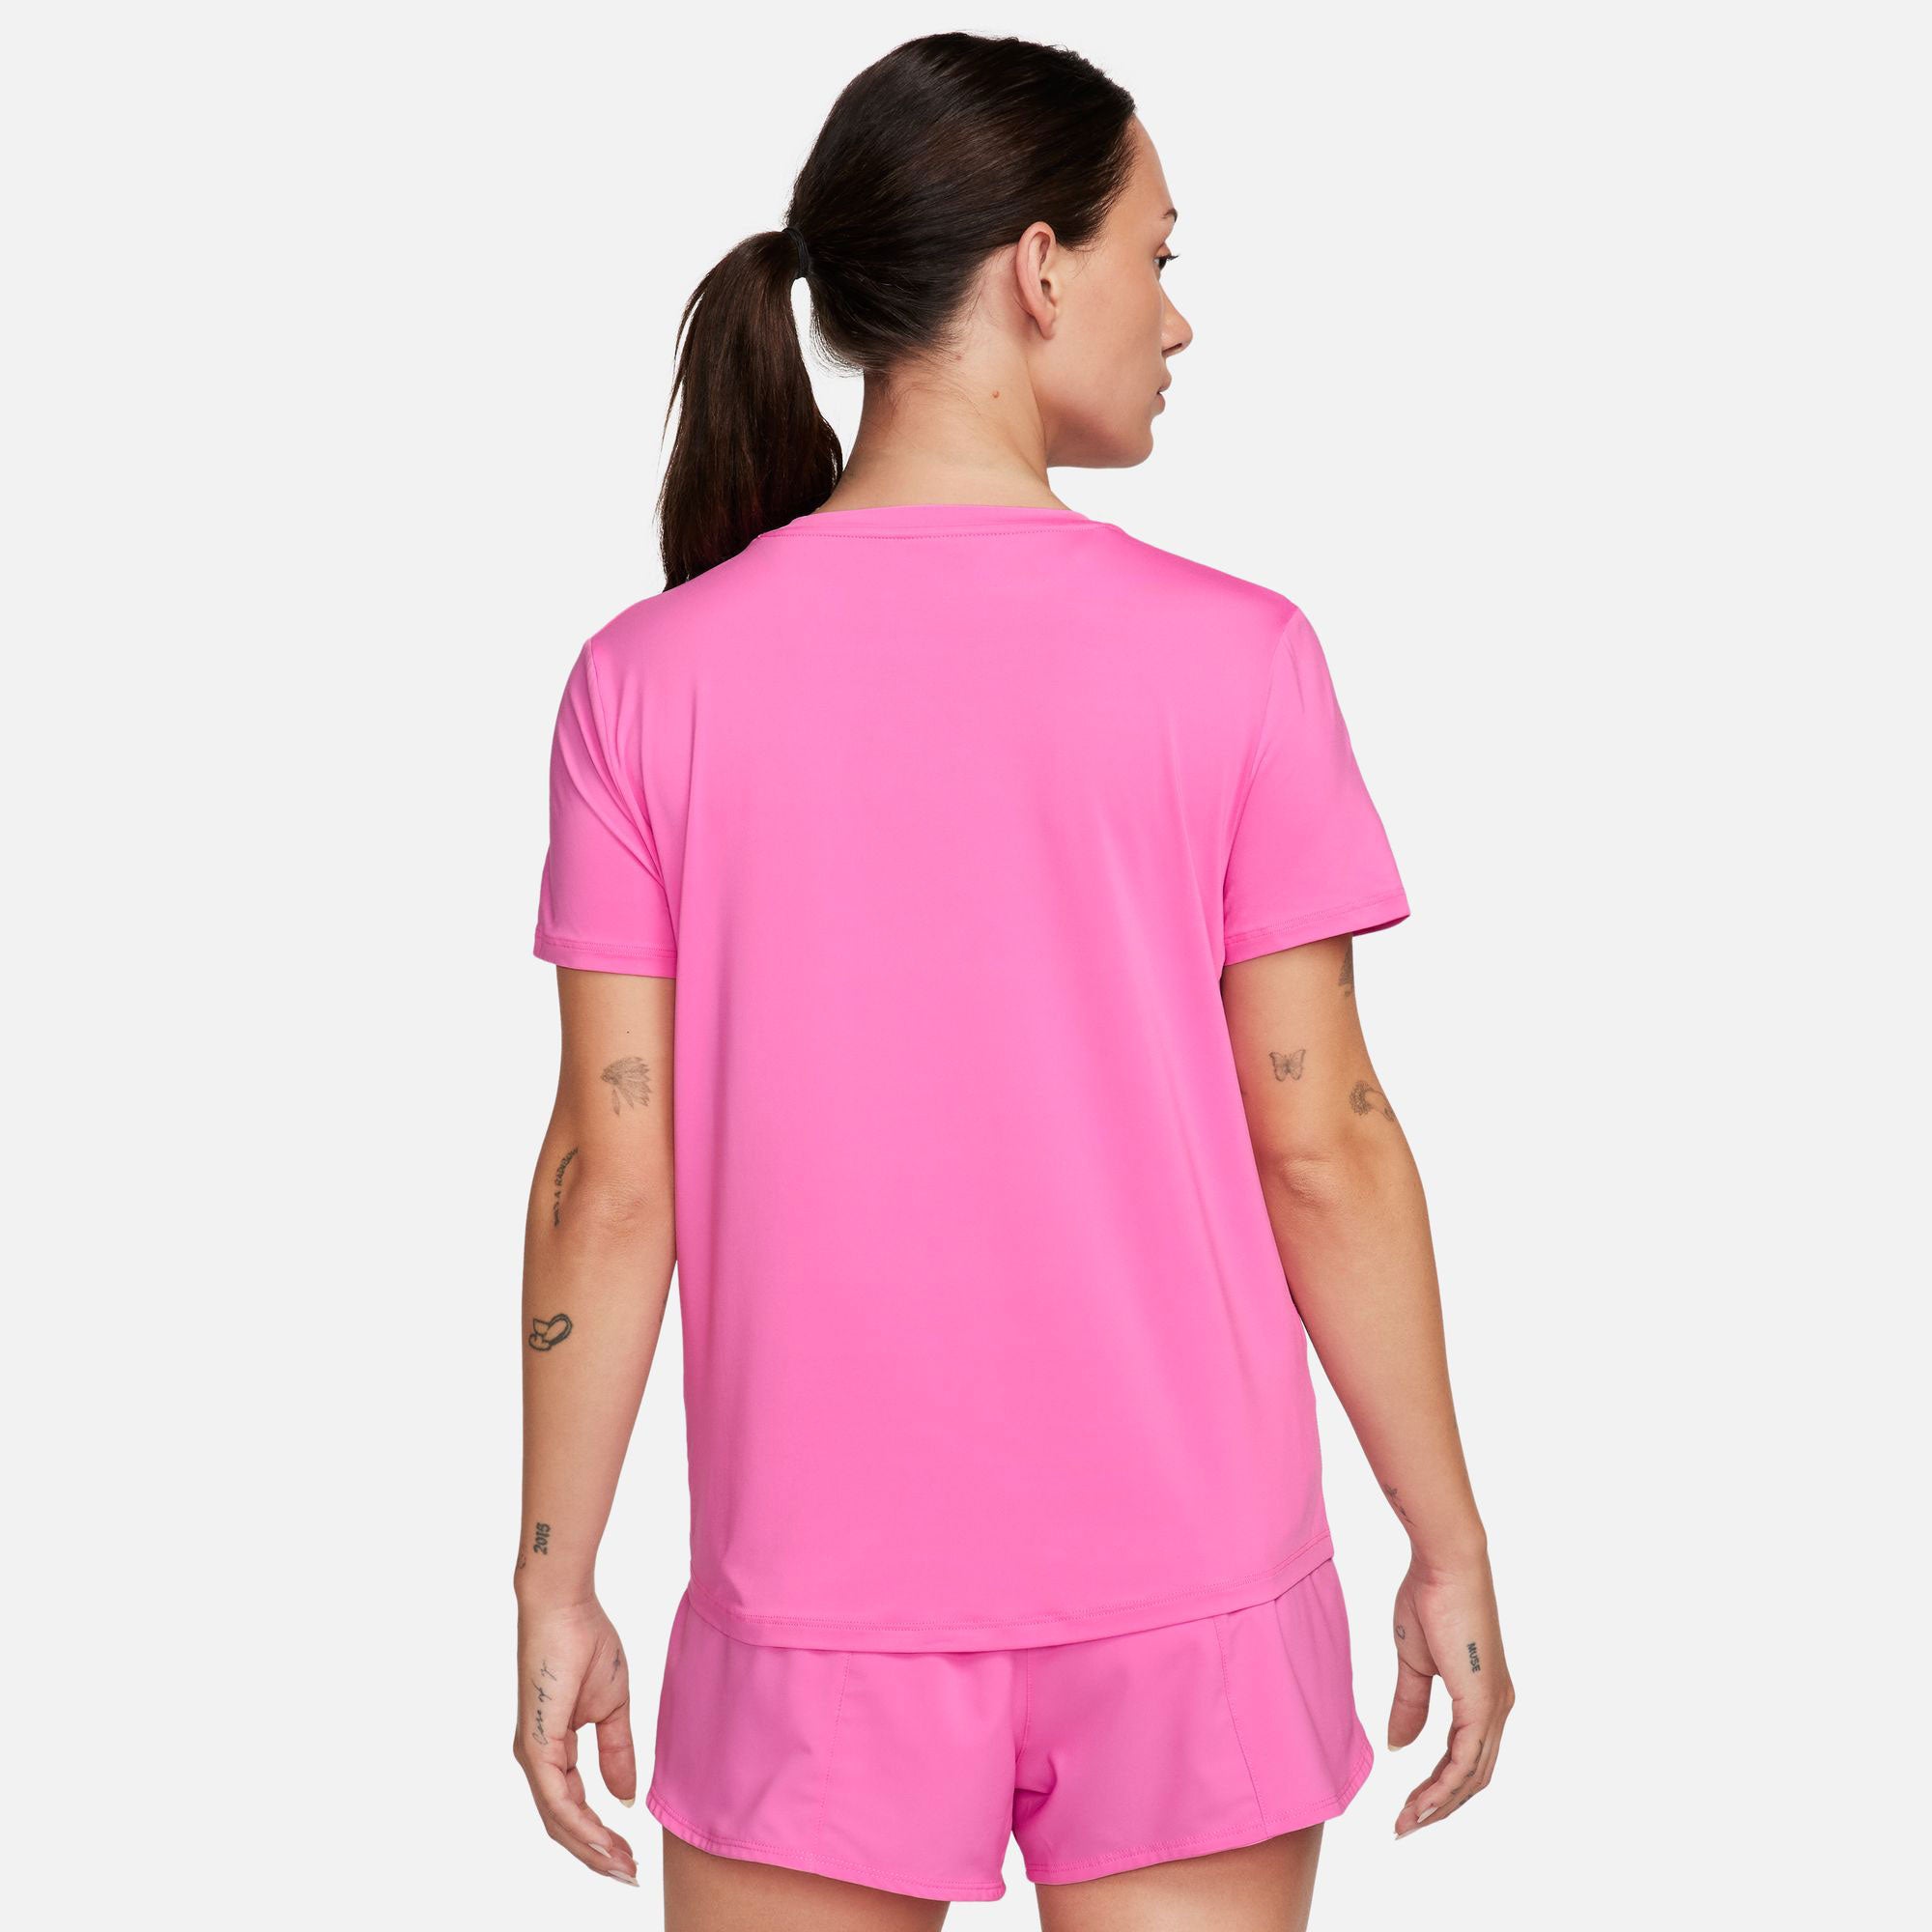 Nike One Classic Women's Dri-FIT Shirt - Pink (2)